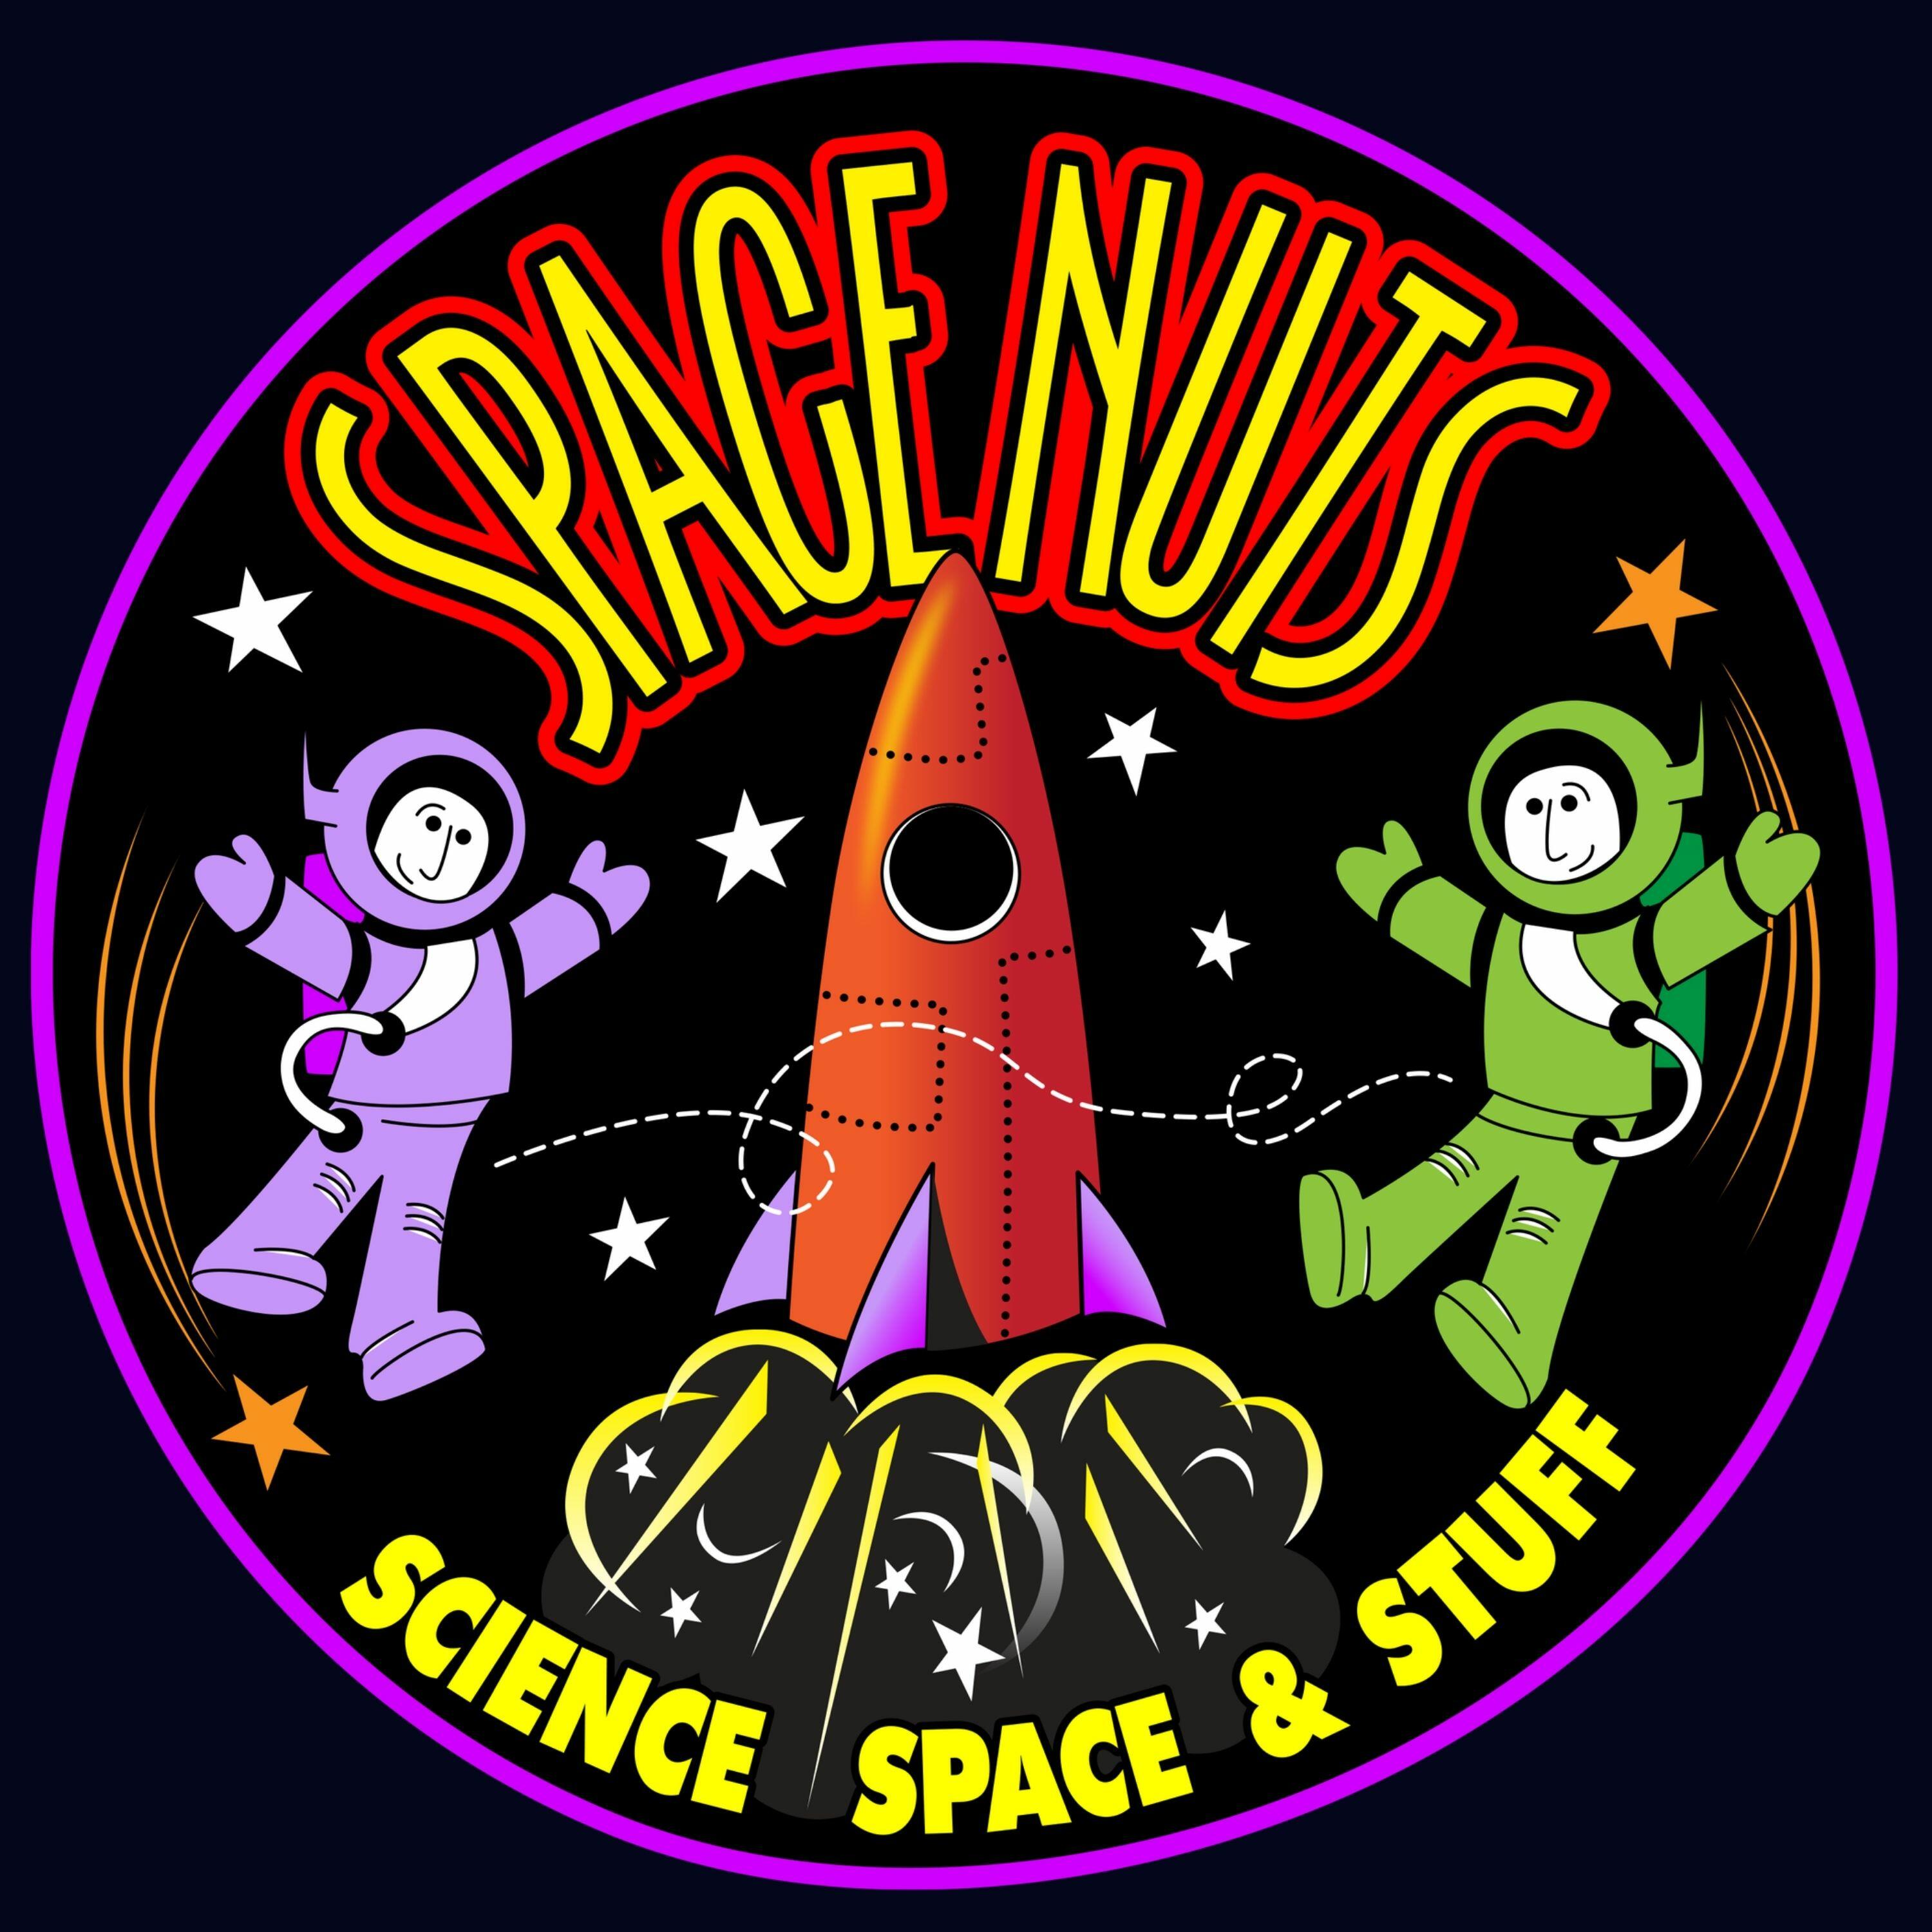 2003 Space Nuts. Space Nuts. Space Junk логотип. HEREONNEPTUNE. Thing space